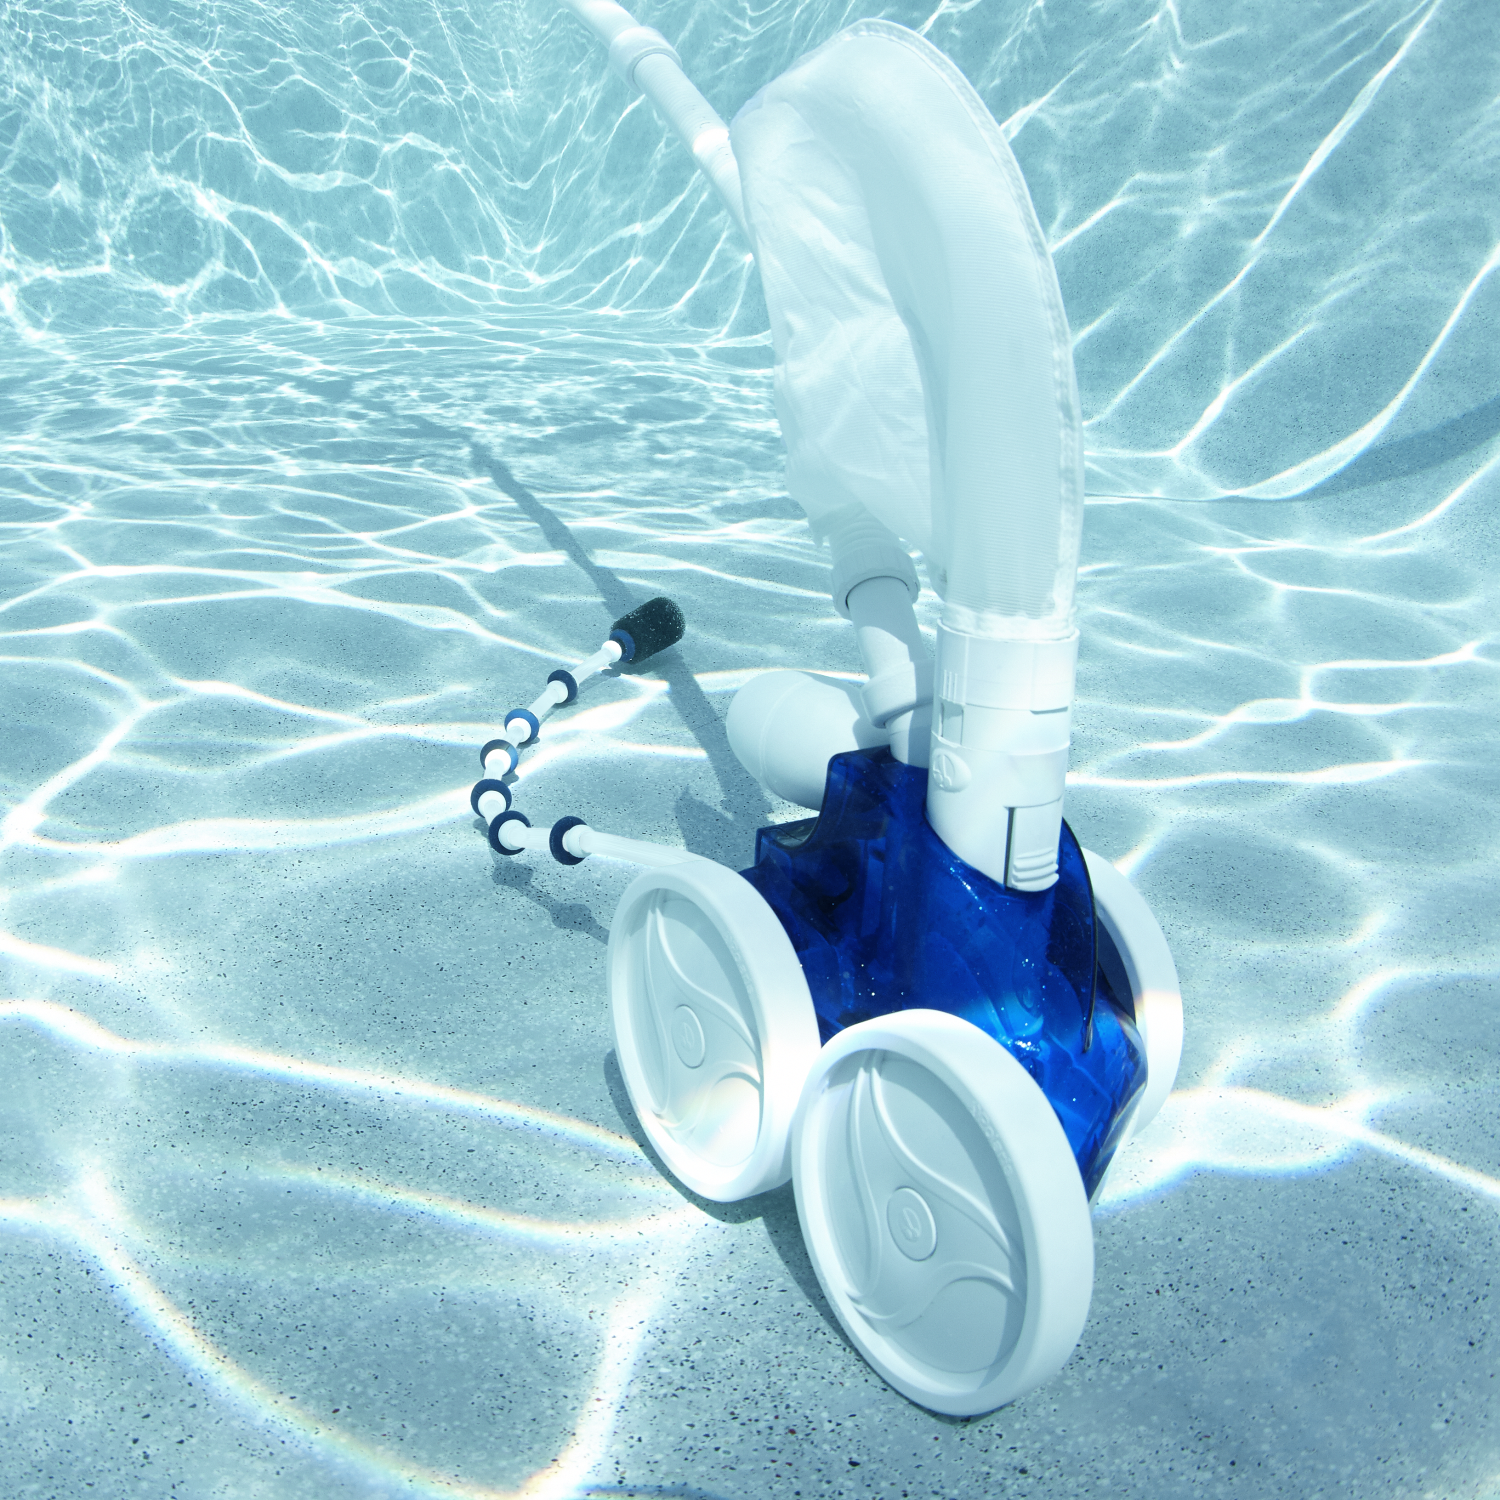 polaris-9450-robotic-pool-cleaner-1-swimming-pool-cleaner-worldwide